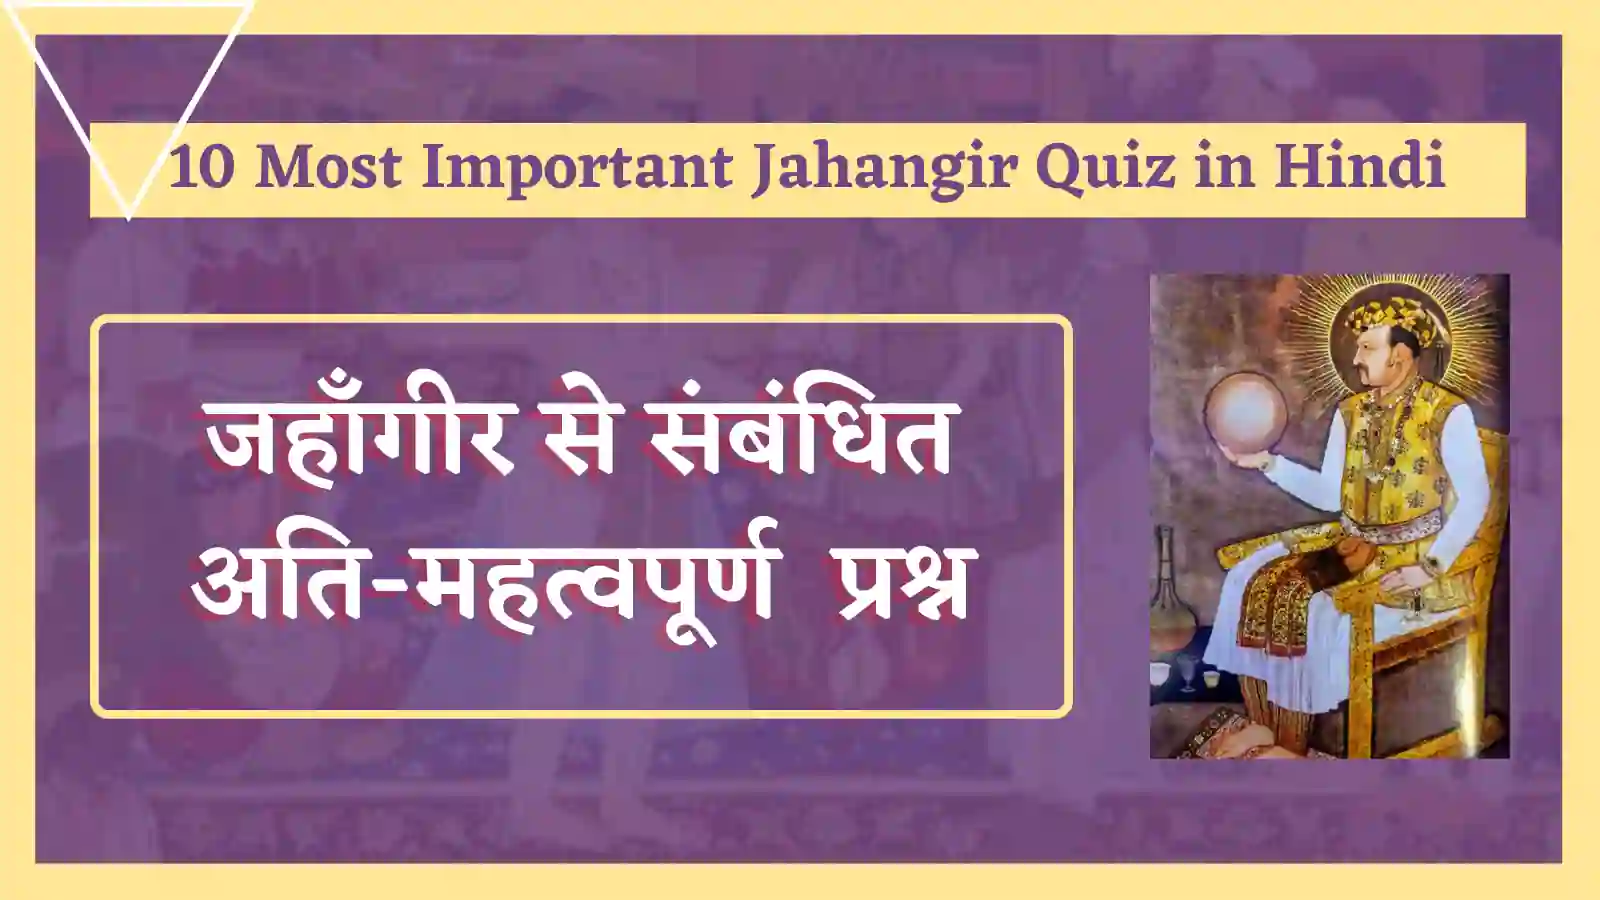 Jahangir Quiz in Hindi